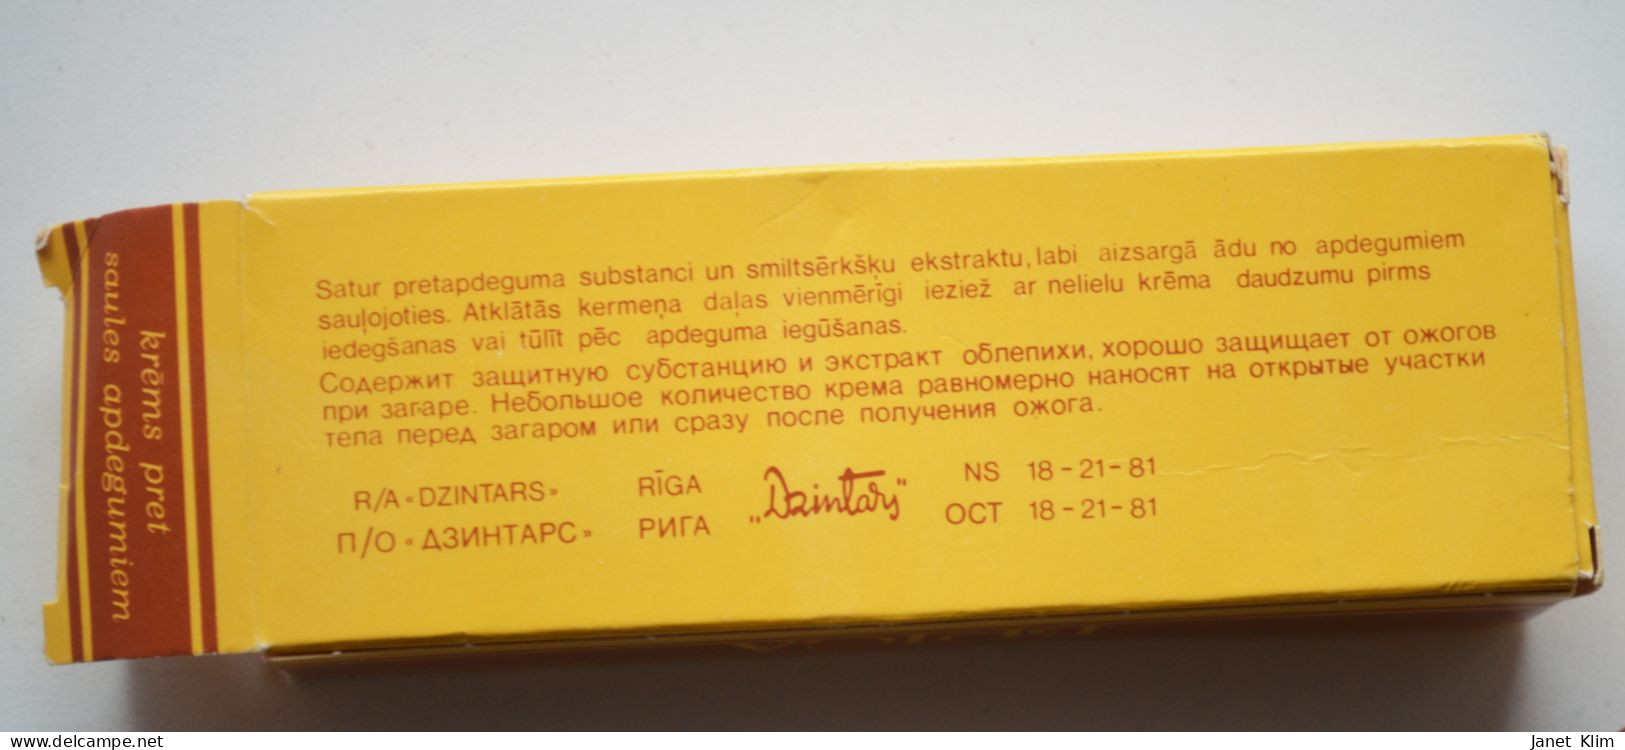 Vintage Cream Briga-dzintars Sunburn Cream - Beauty Products